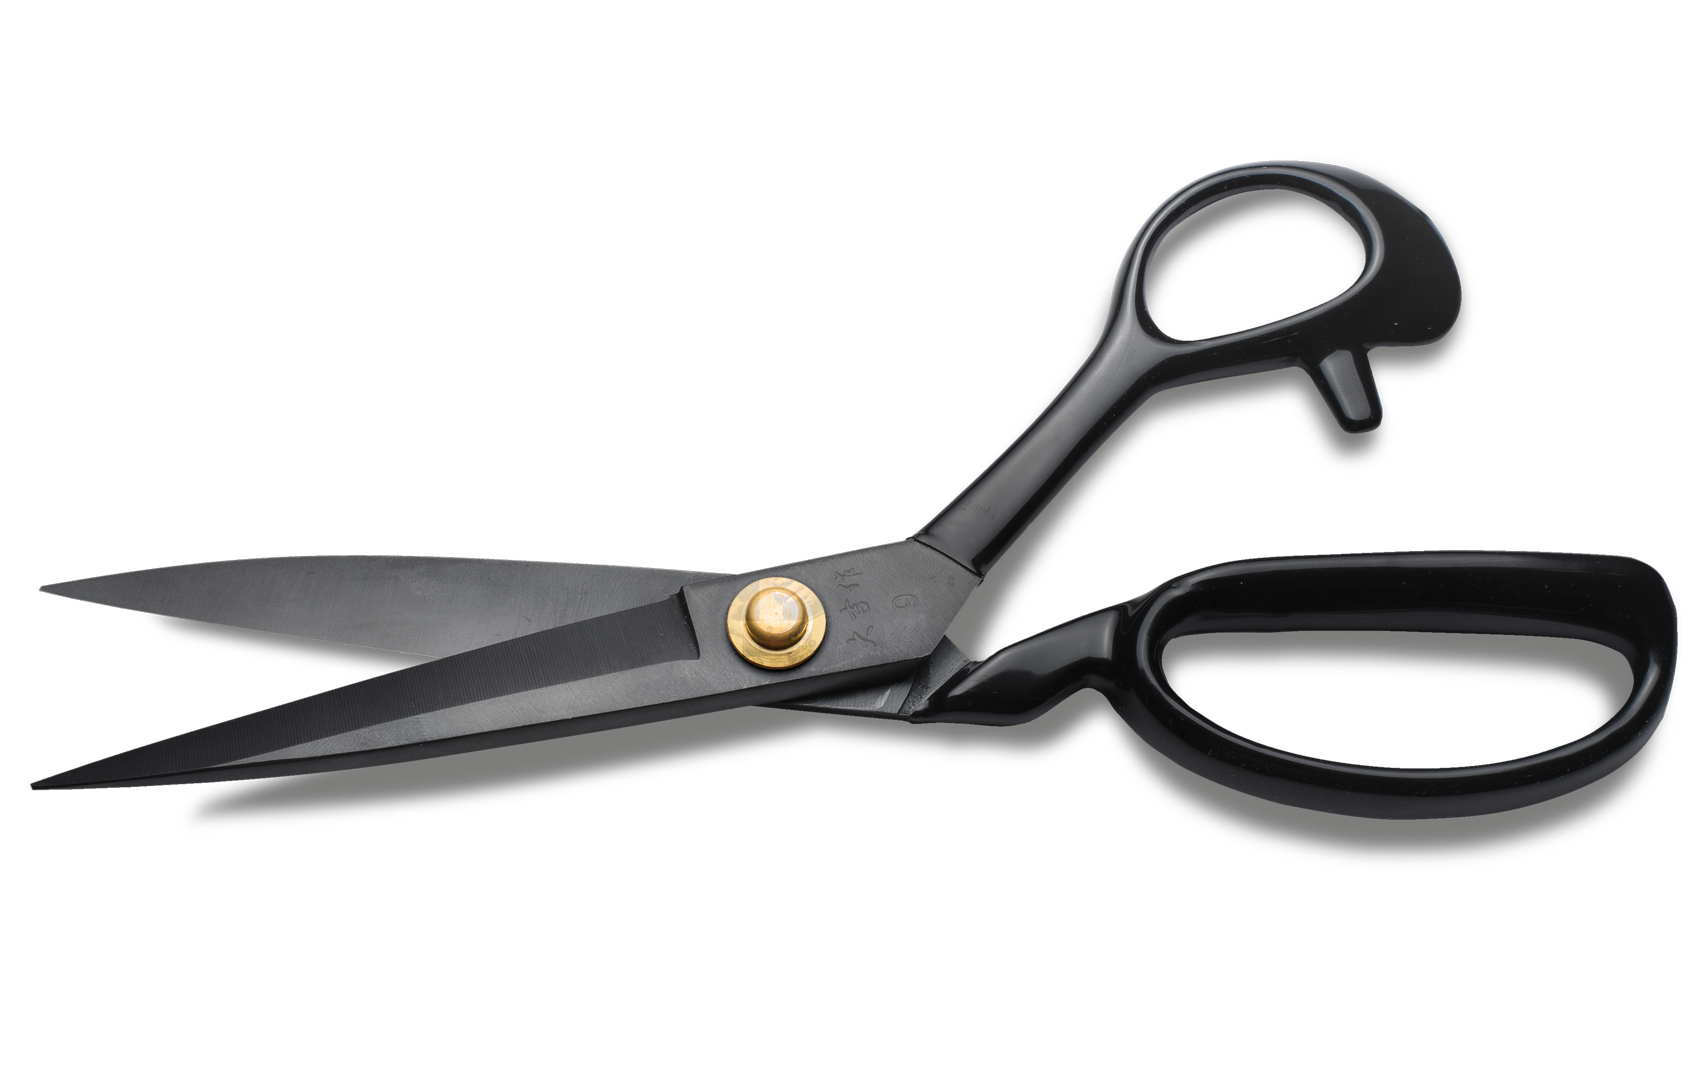 shears clipart fabric scissors